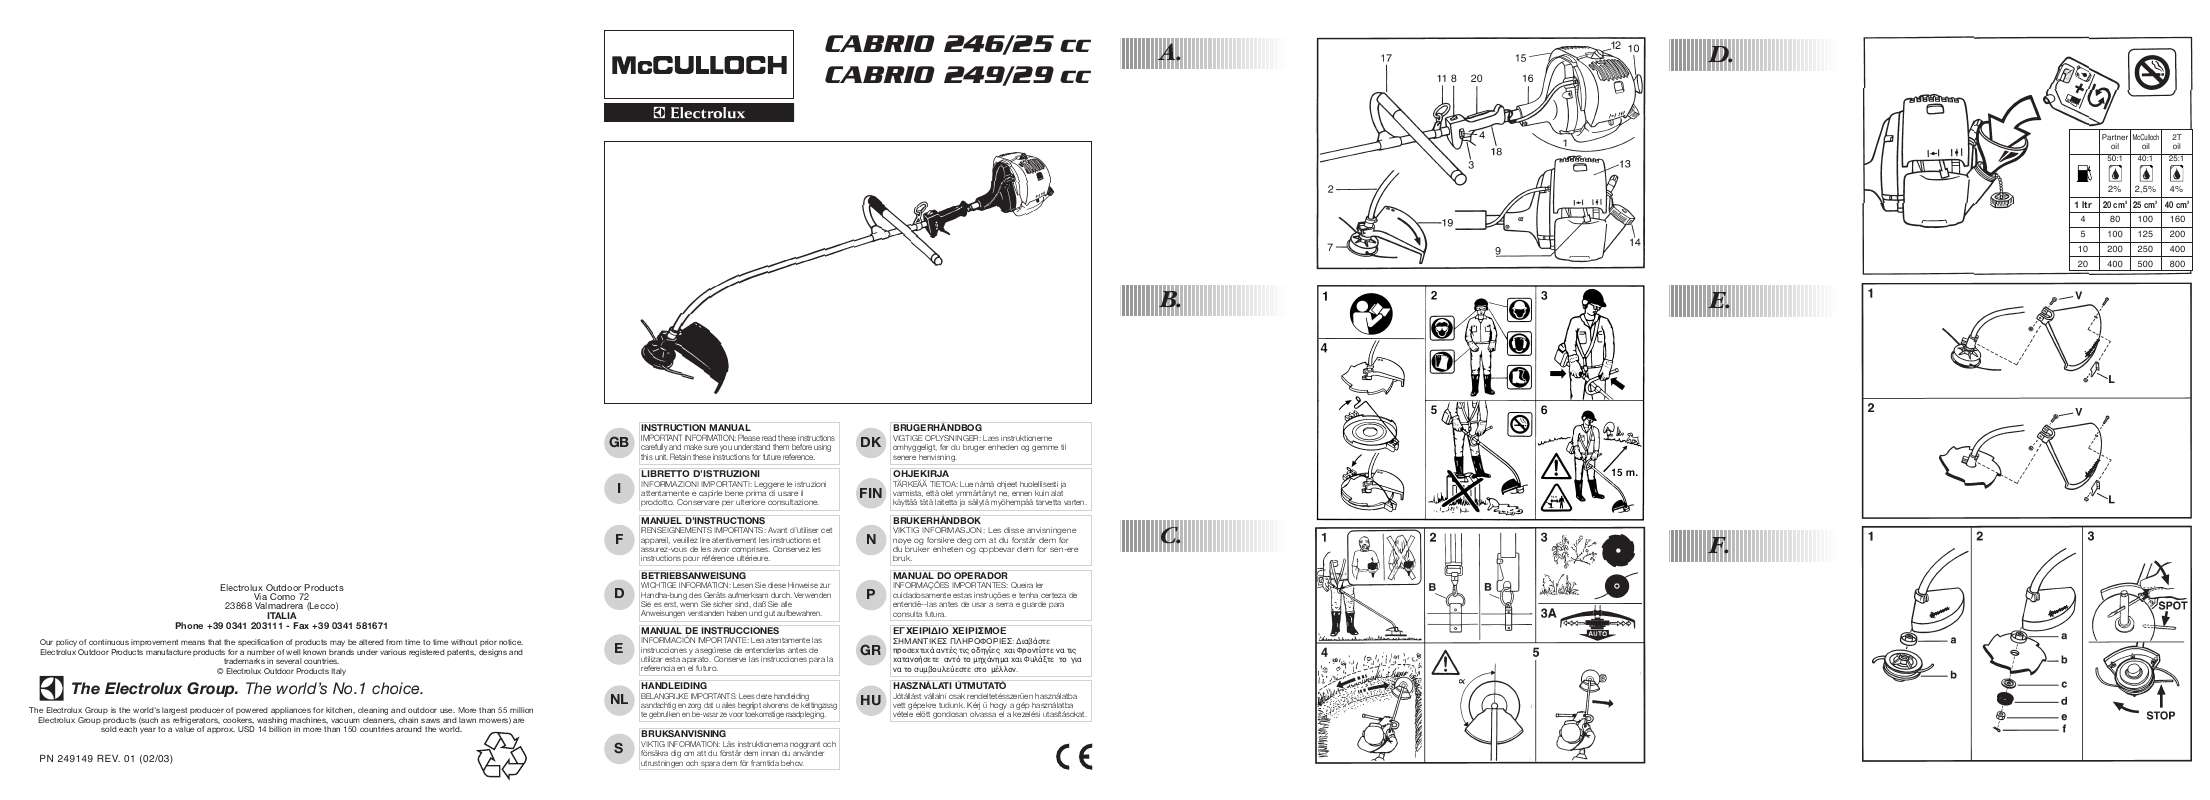 Guide utilisation  MCCULLOCH CABRIO 249-29 CC  de la marque MCCULLOCH